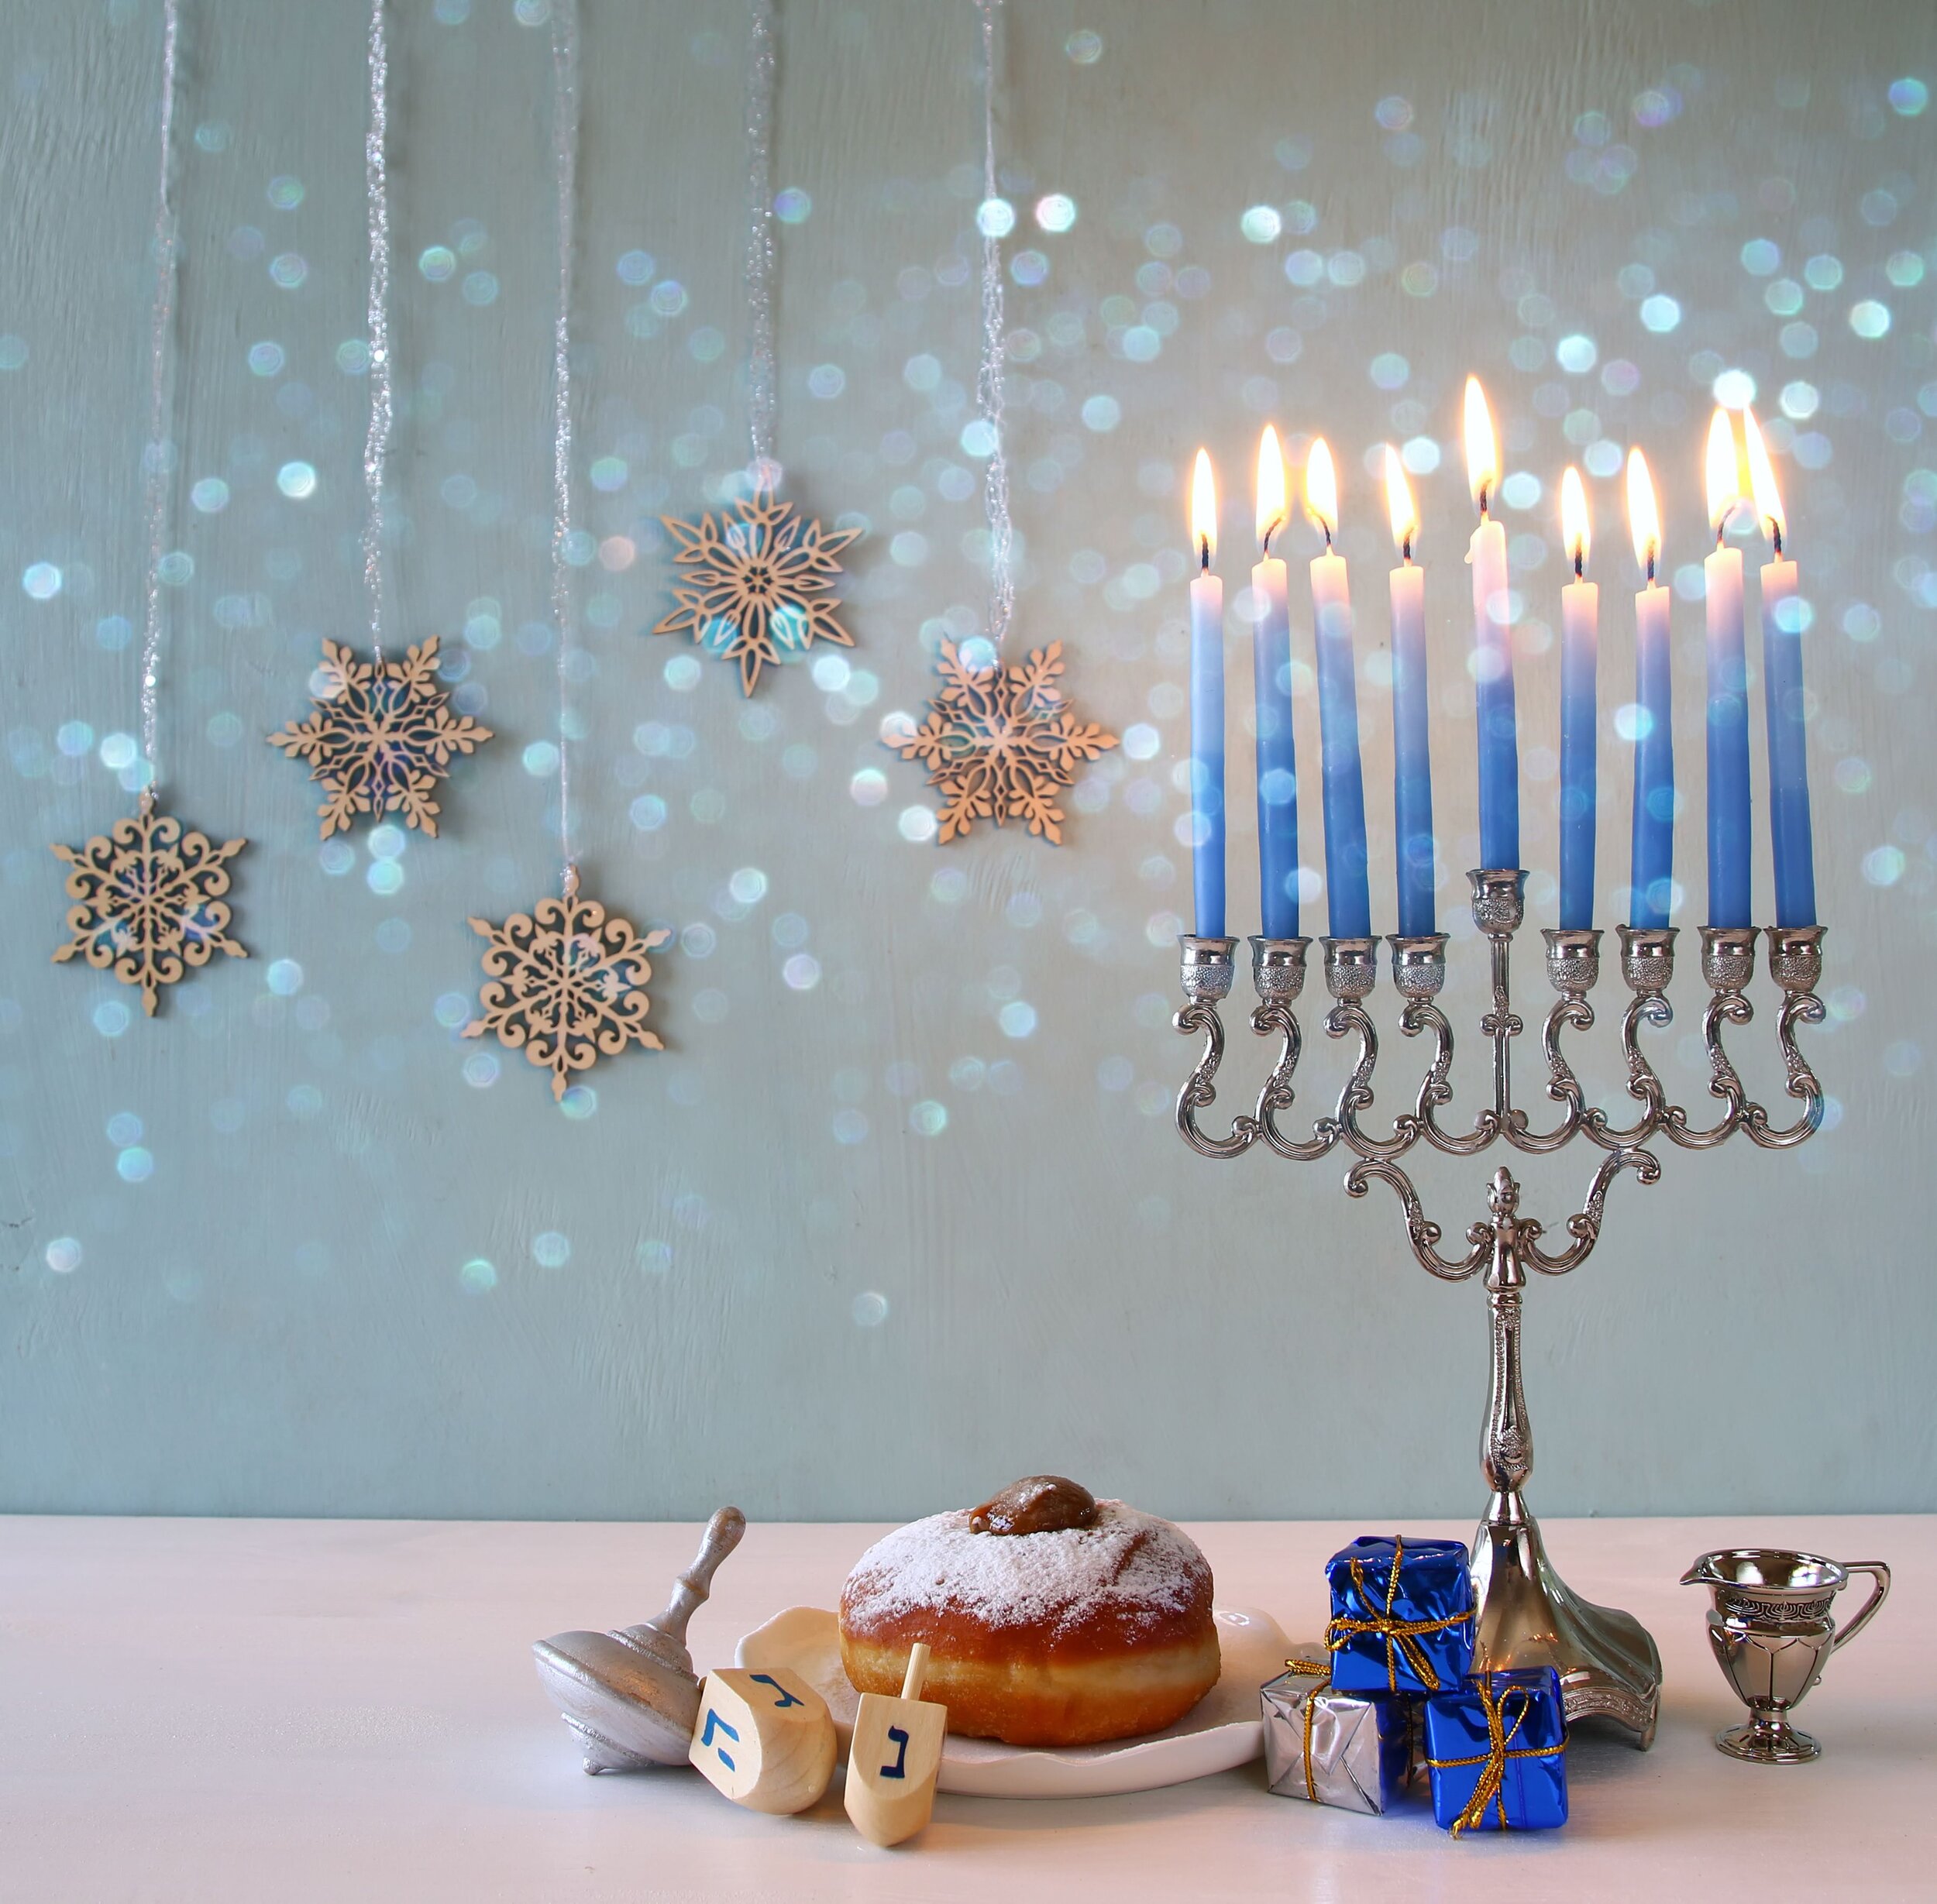 image-of-jewish-holiday-hanukkah-royalty-free-image-623425312-1539702417.jpg